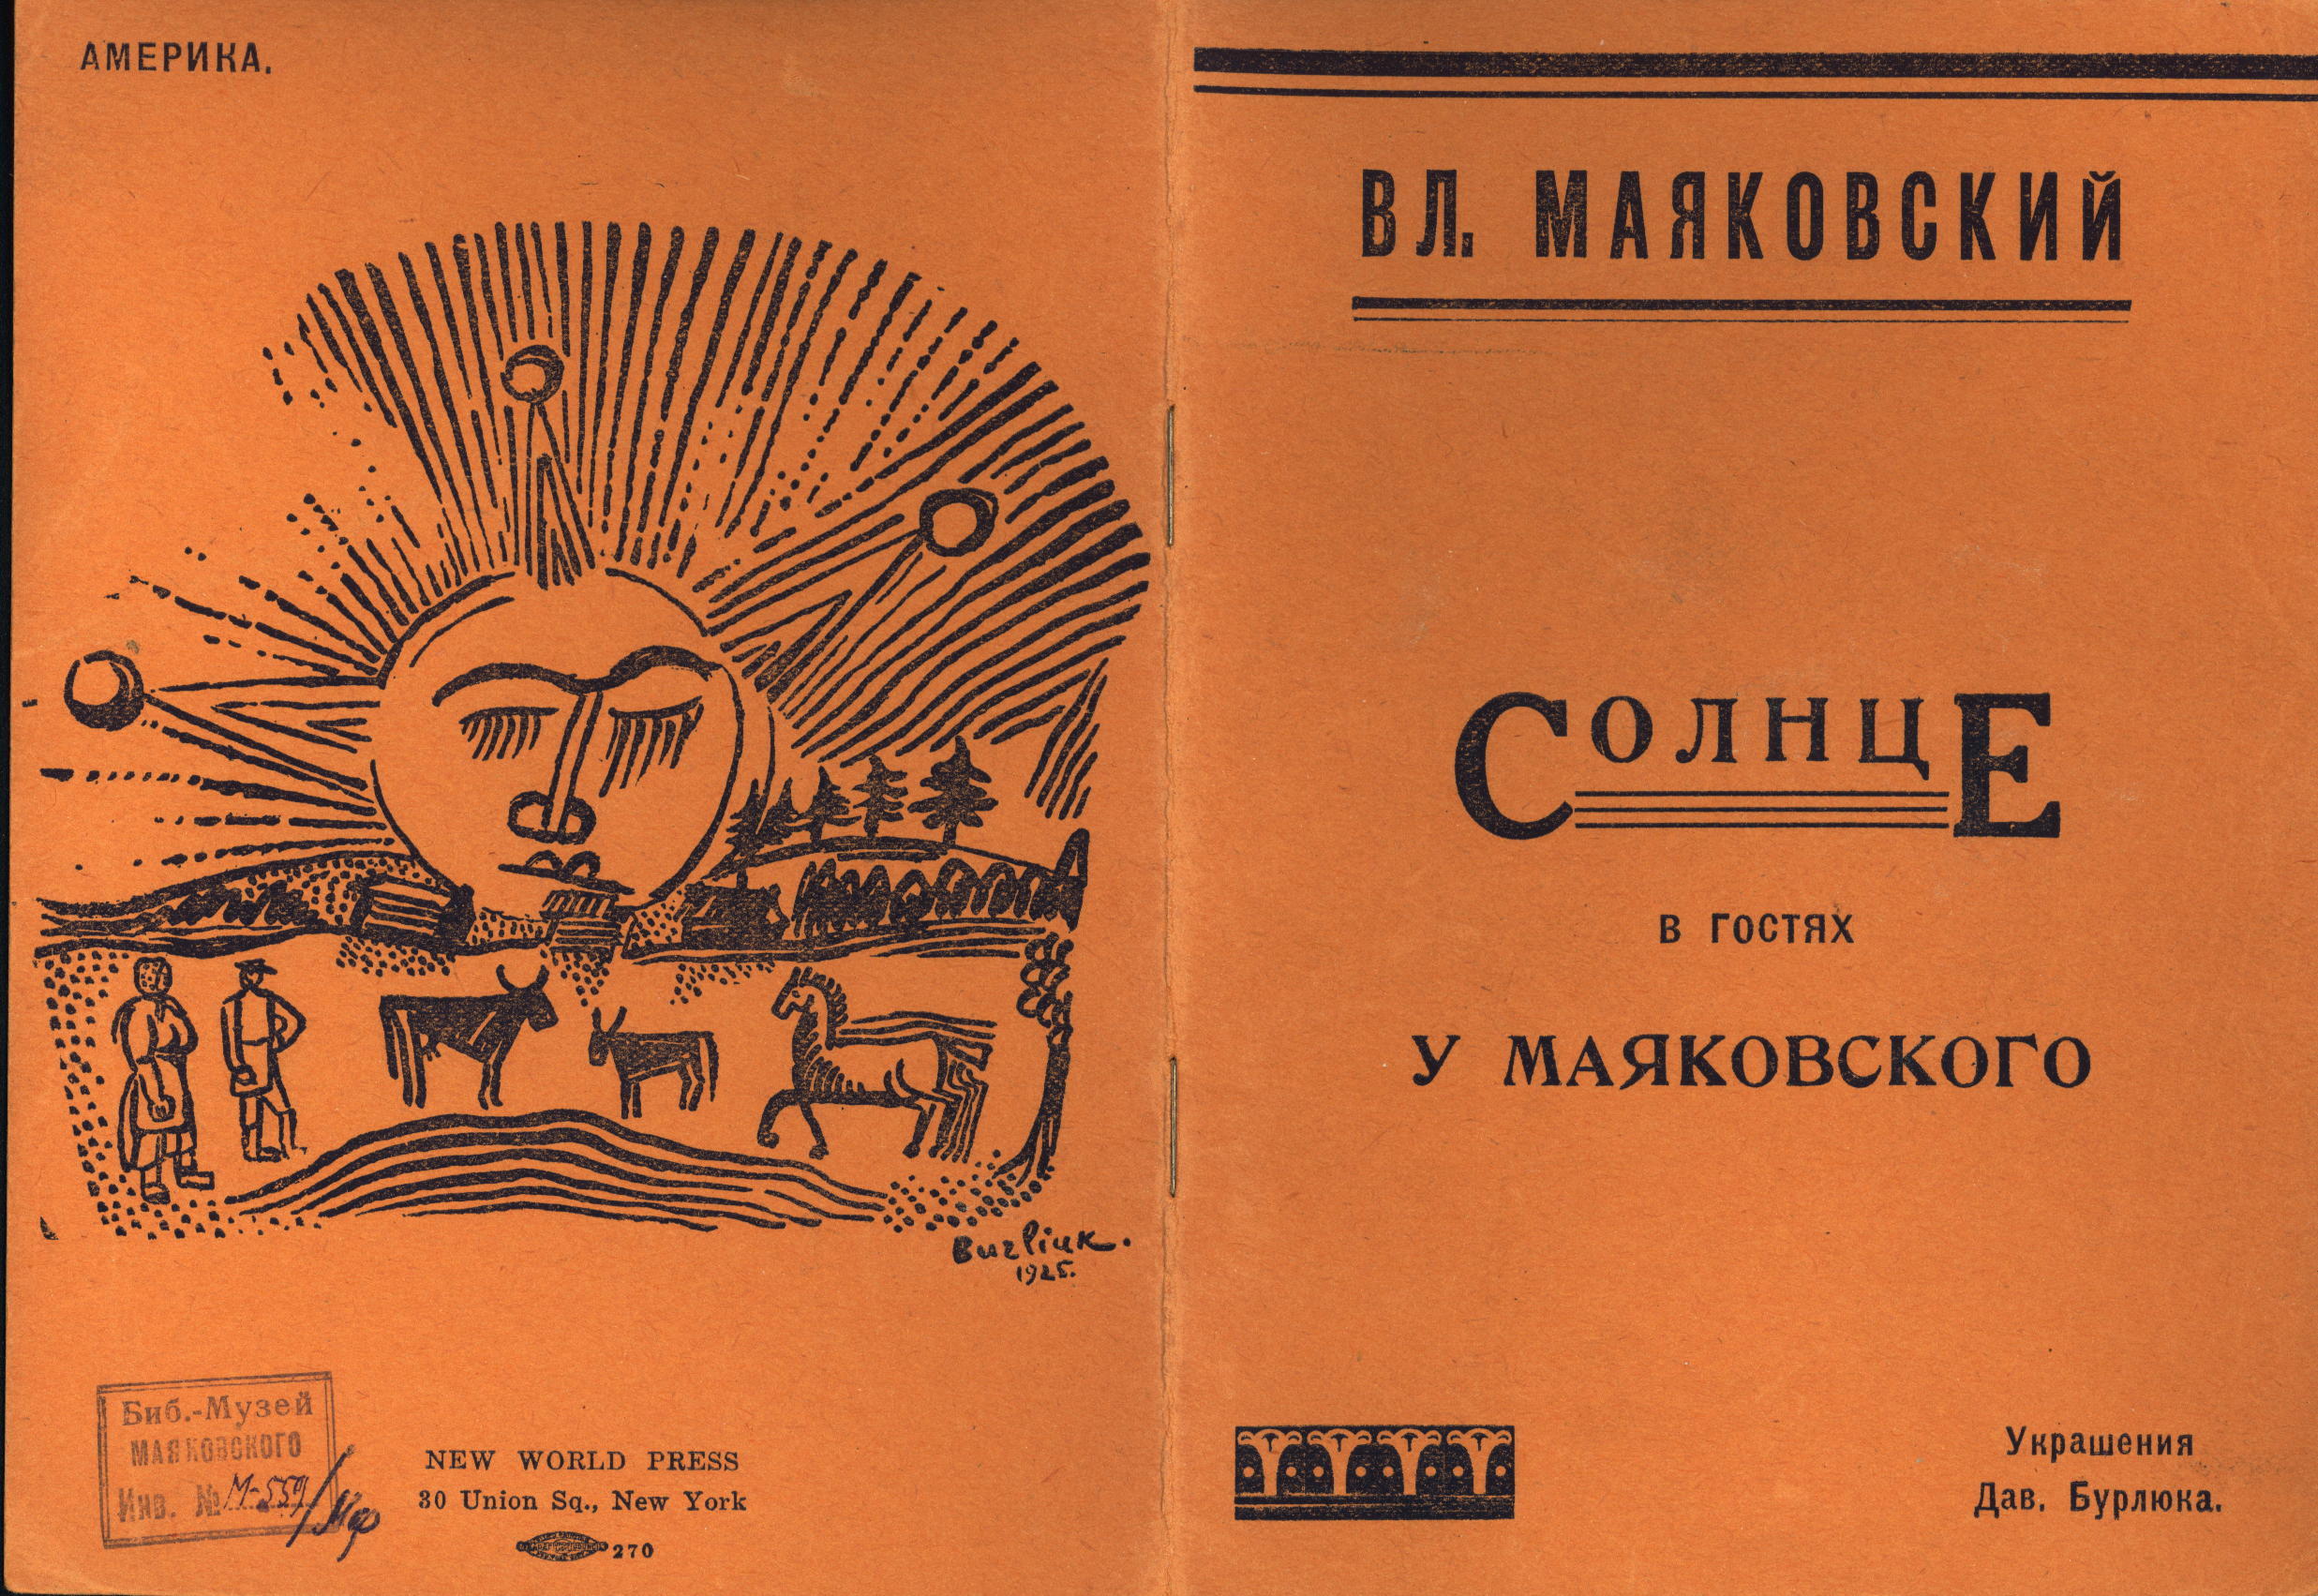 Необычайное приключение слова солнца. Маяковский необычайное приключение бывшее с в Маяковским.